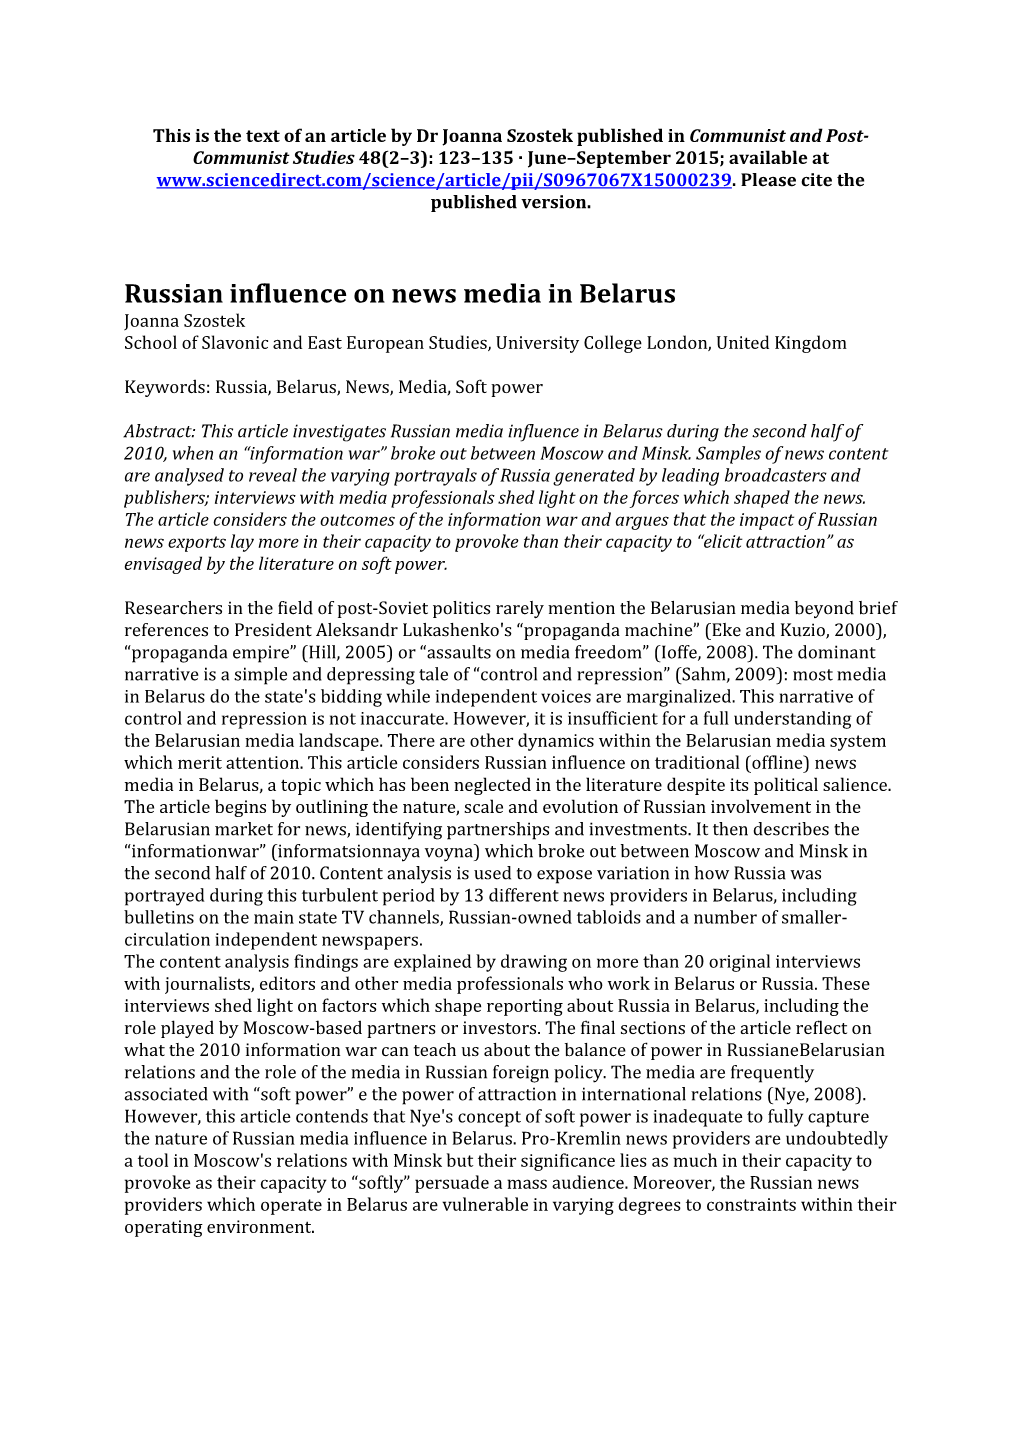 Russian Influence on News Media in Belarus Joanna Szostek School of Slavonic and East European Studies, University College London, United Kingdom